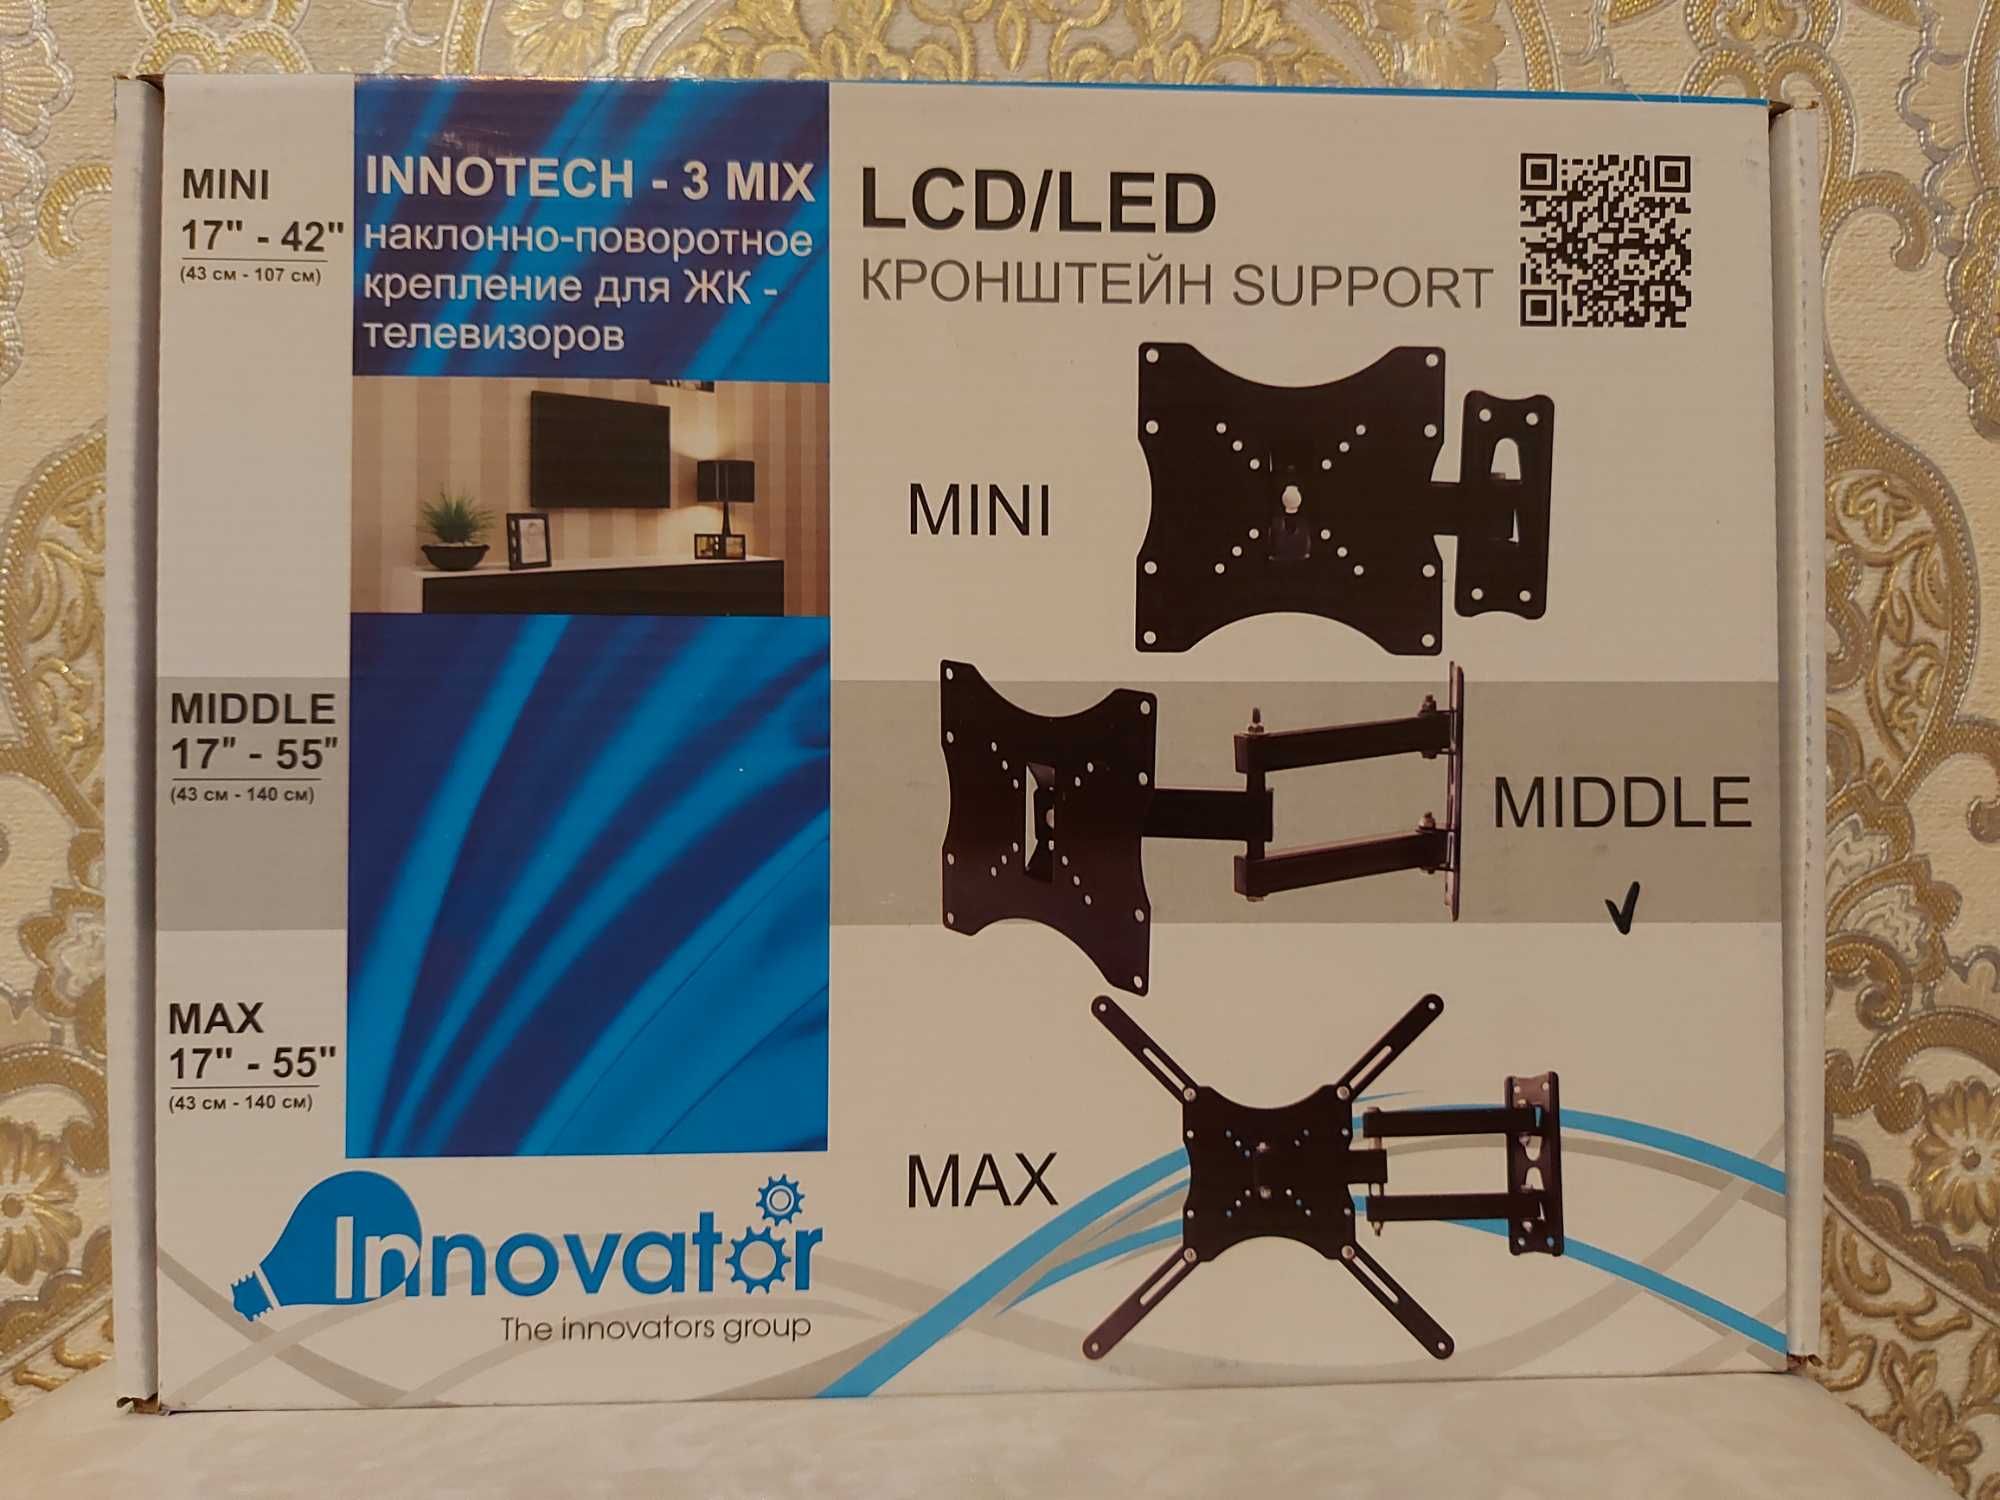 Наклонно-поворотный кронштейн для телевизора INNOVATOR Innotech-3mix